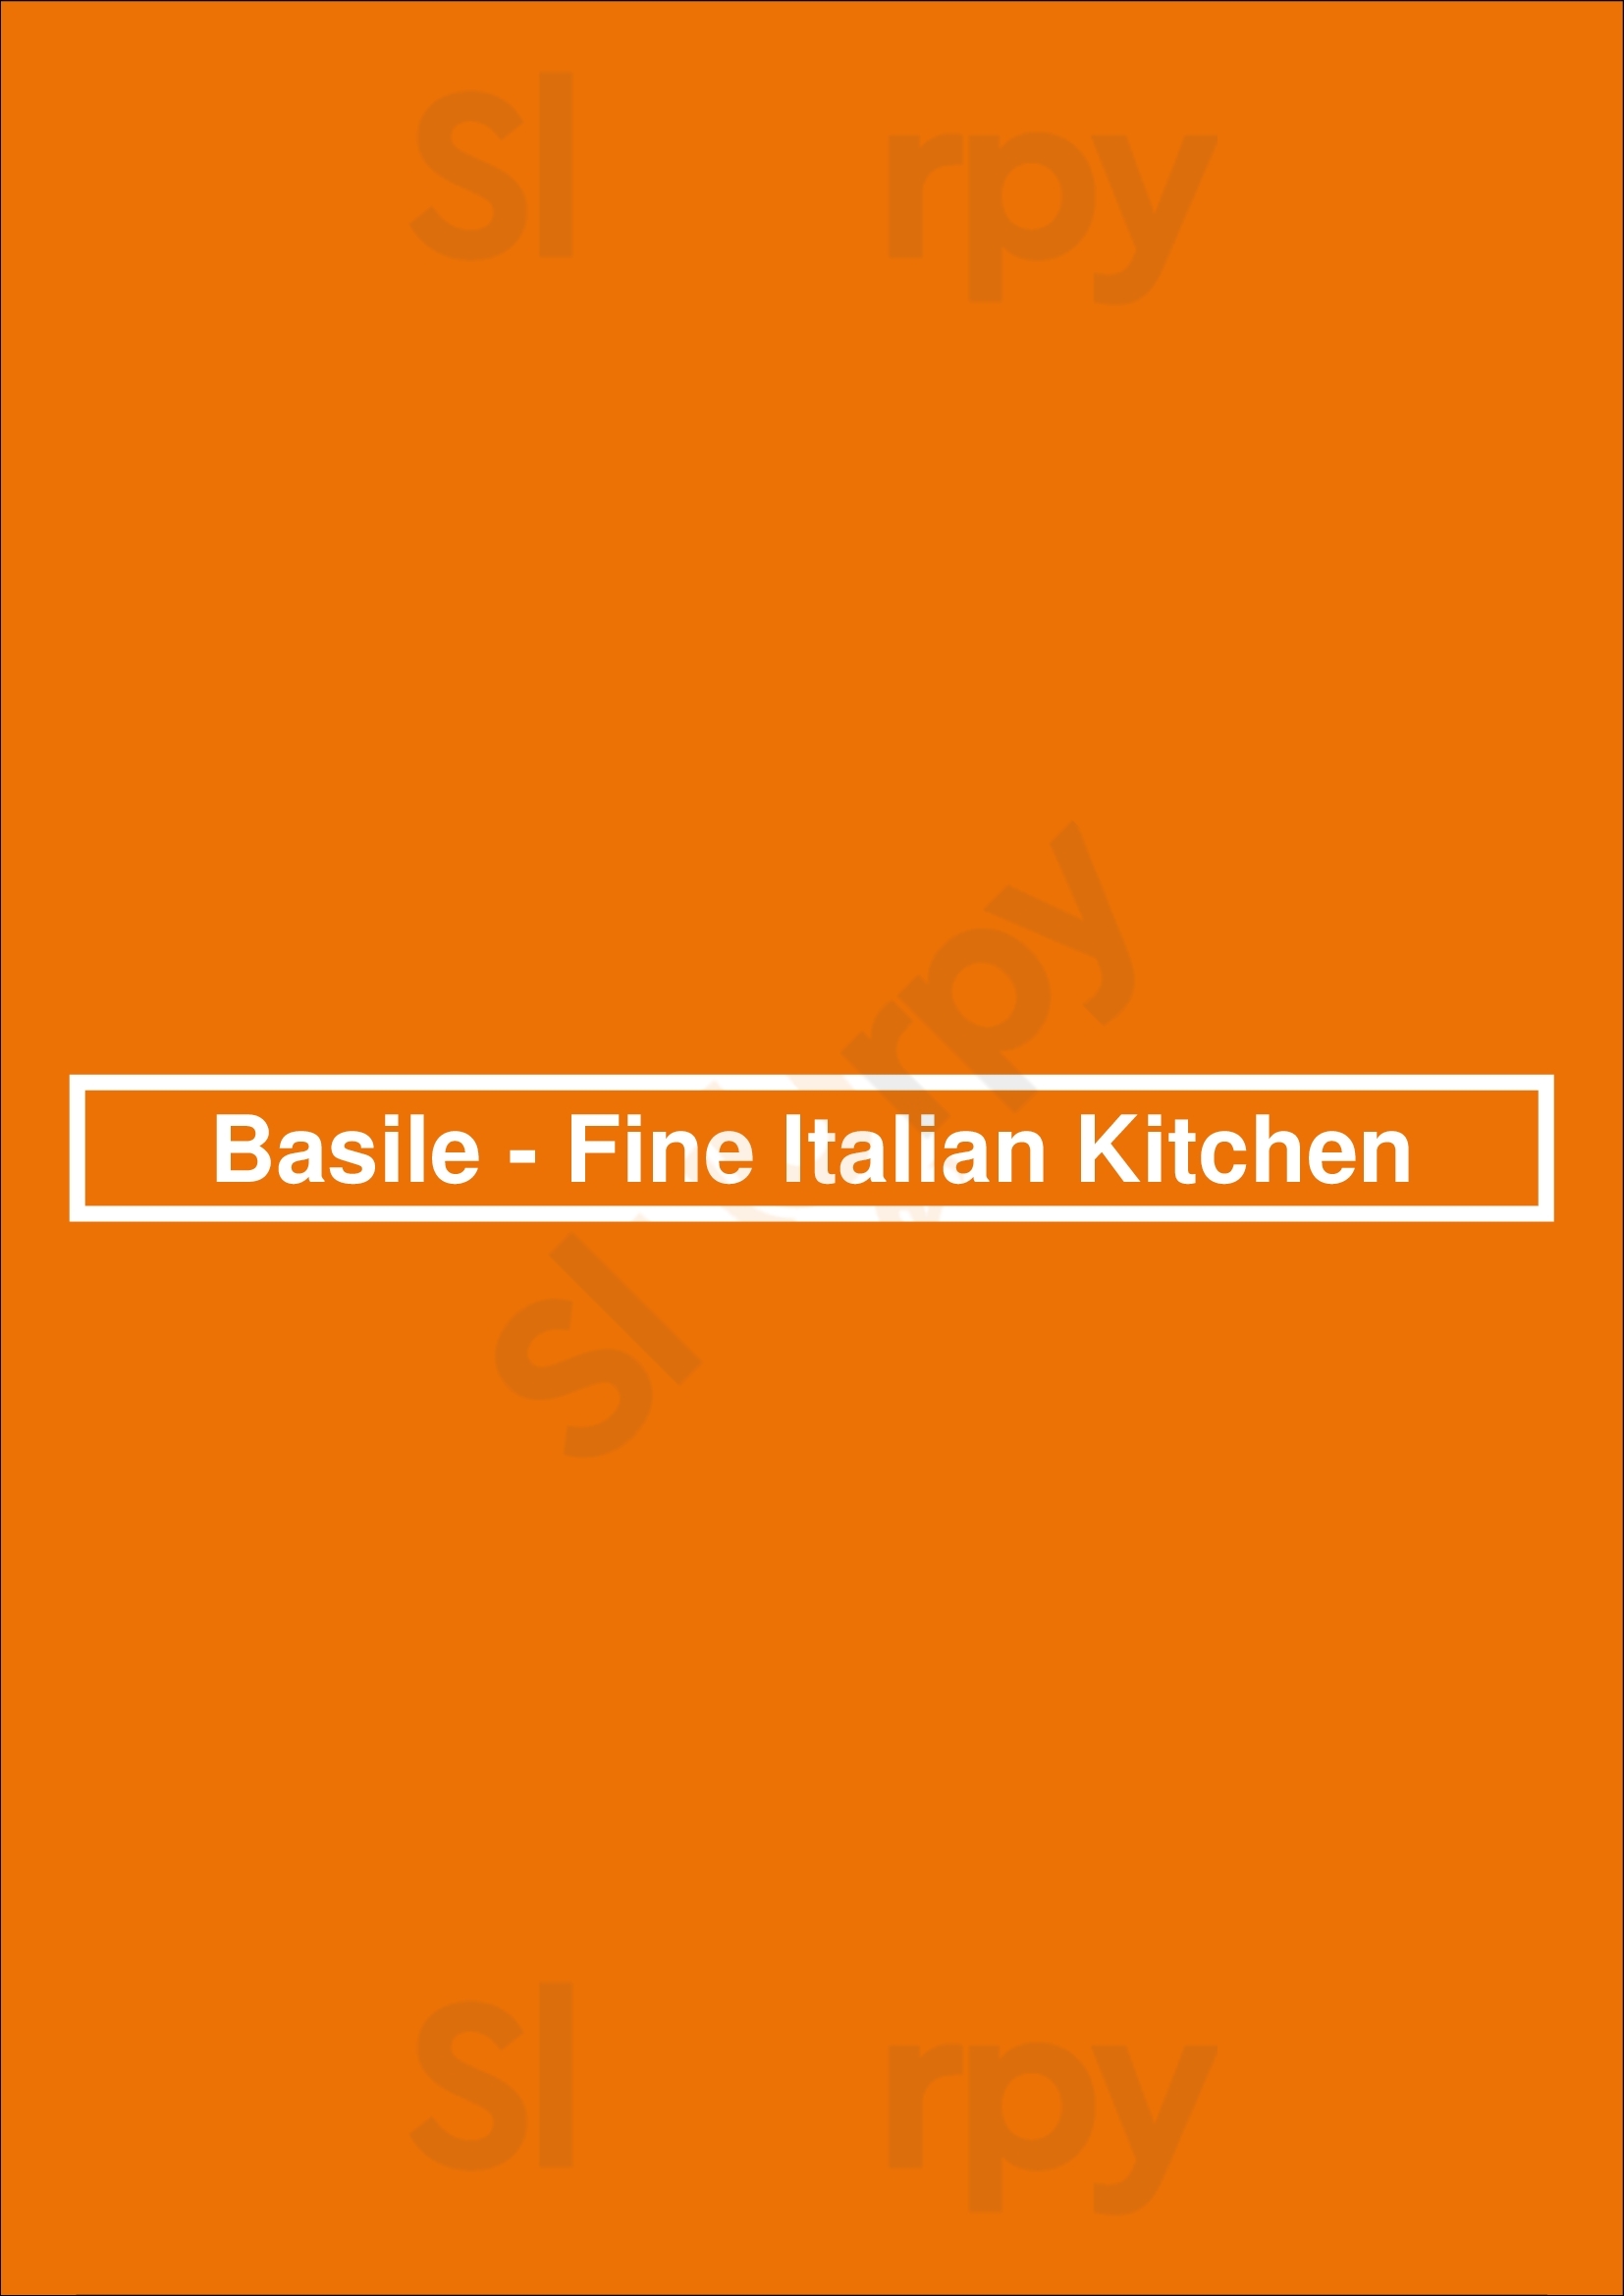 Basile - Fine Italian Kitchen Boston Menu - 1